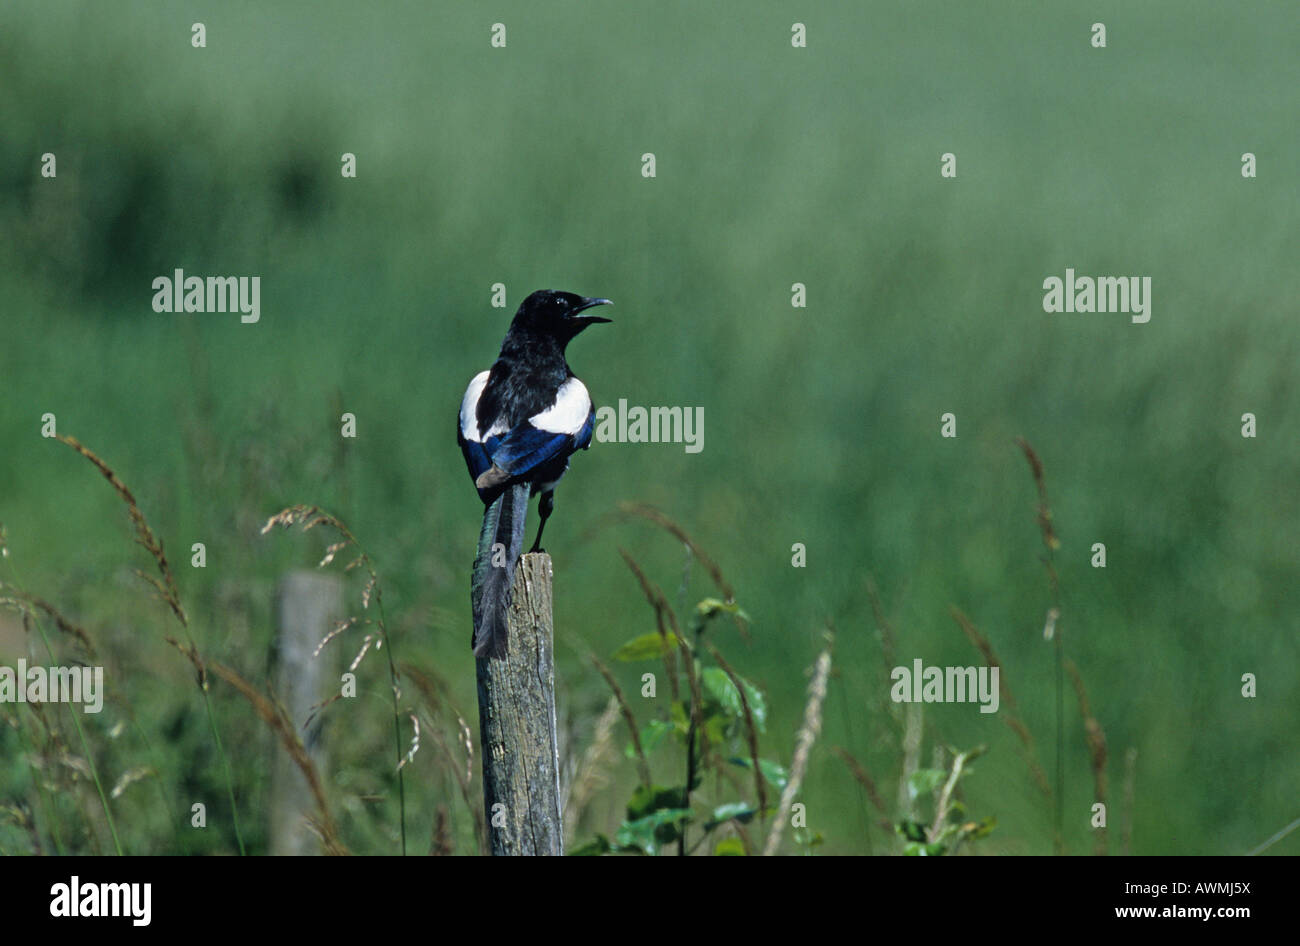 Black-billed magpie (Pica pica) Stock Photo